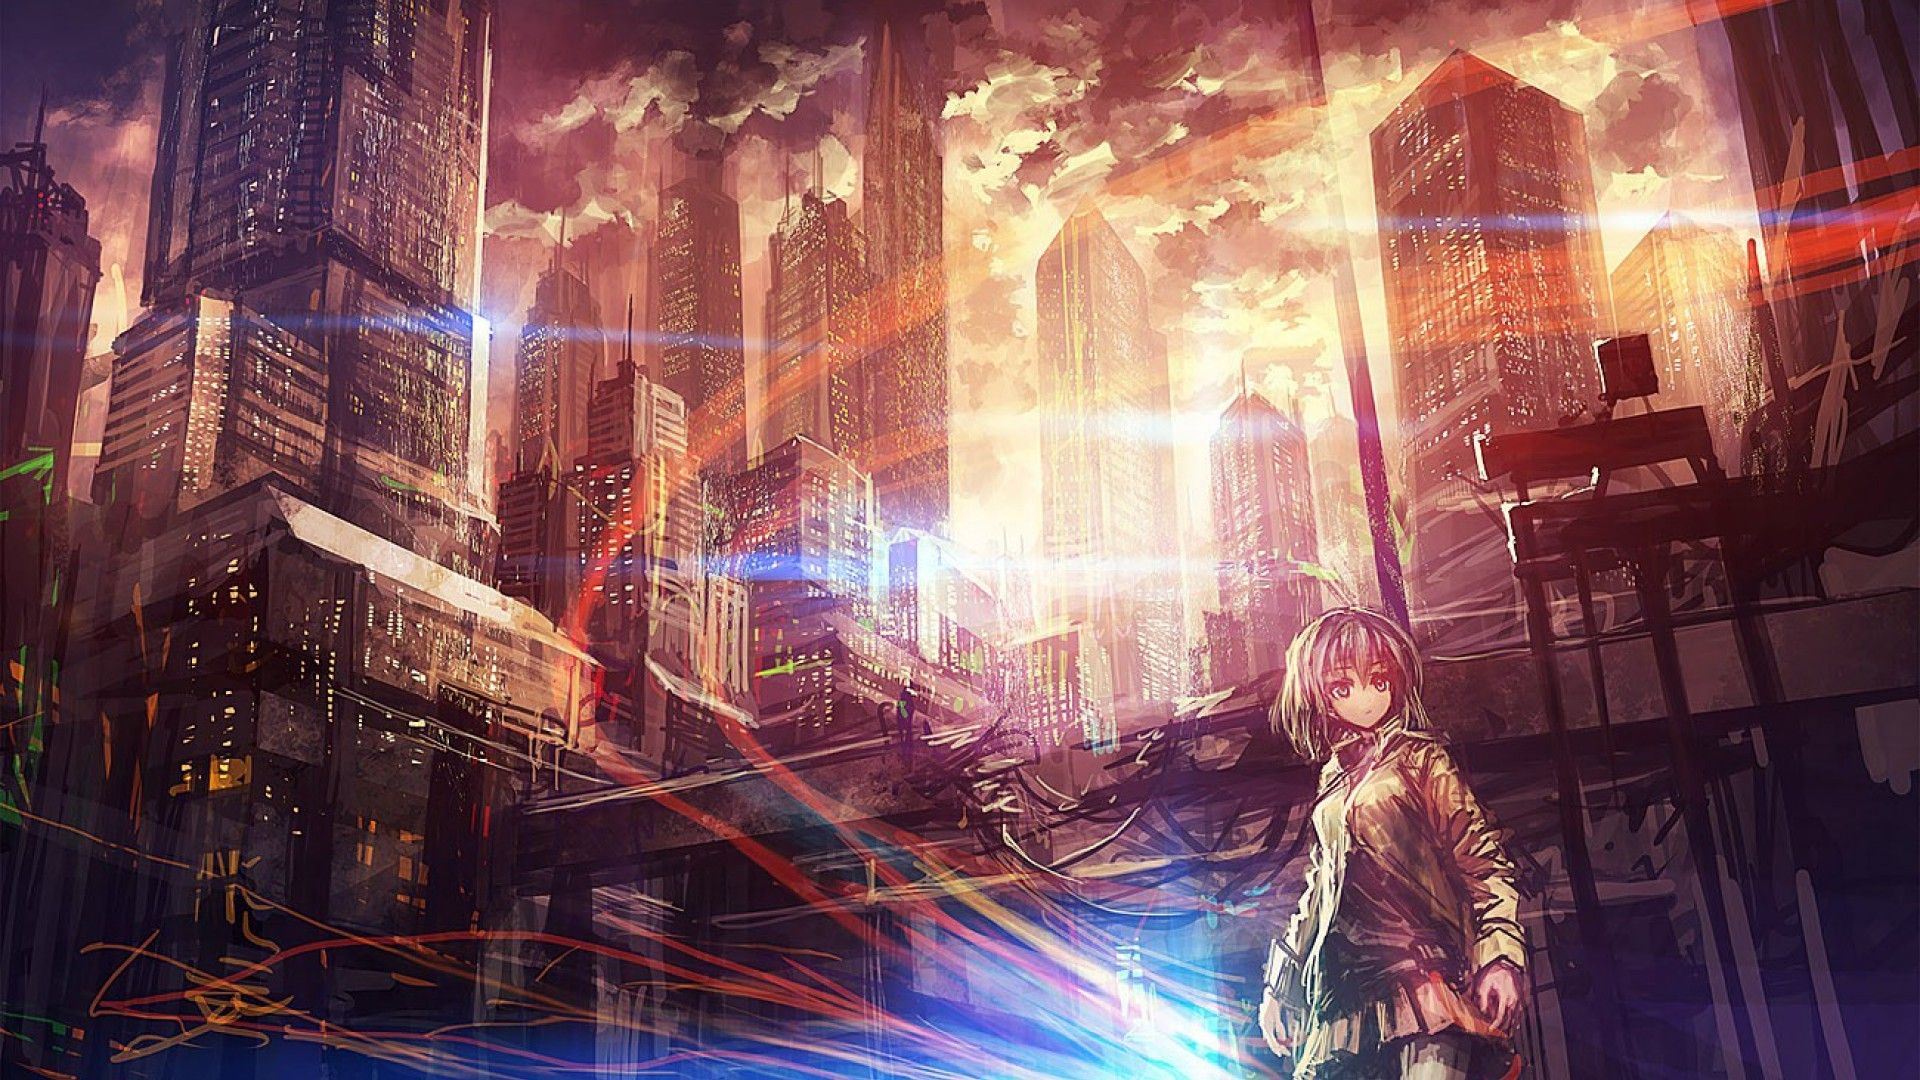 Dark Anime Scenery Wallpaper background picture